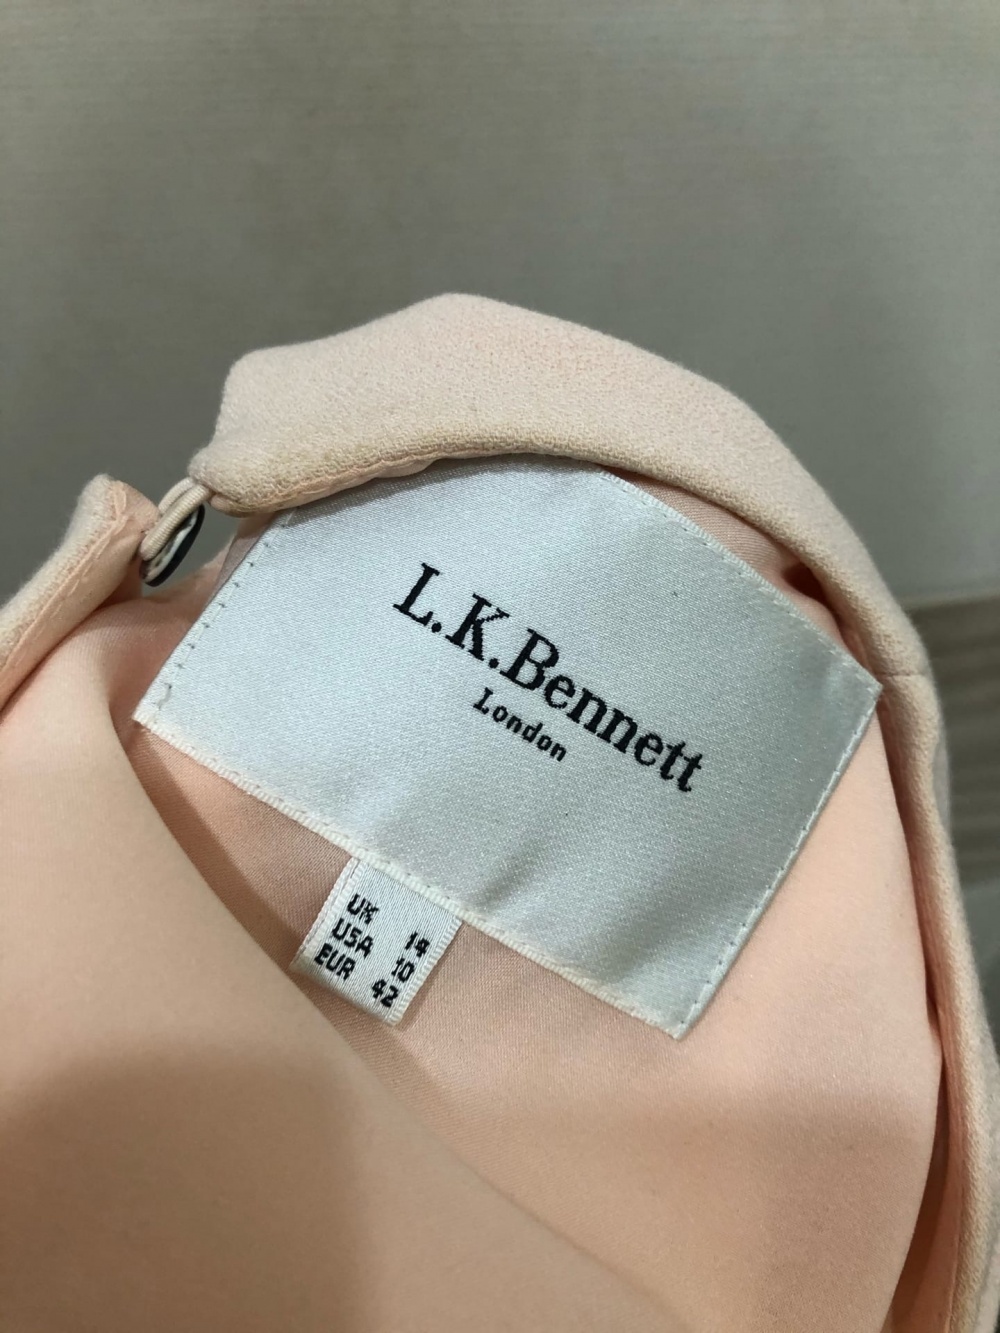 Платье LK Bennett.Размер Евр. 42, UK 14.